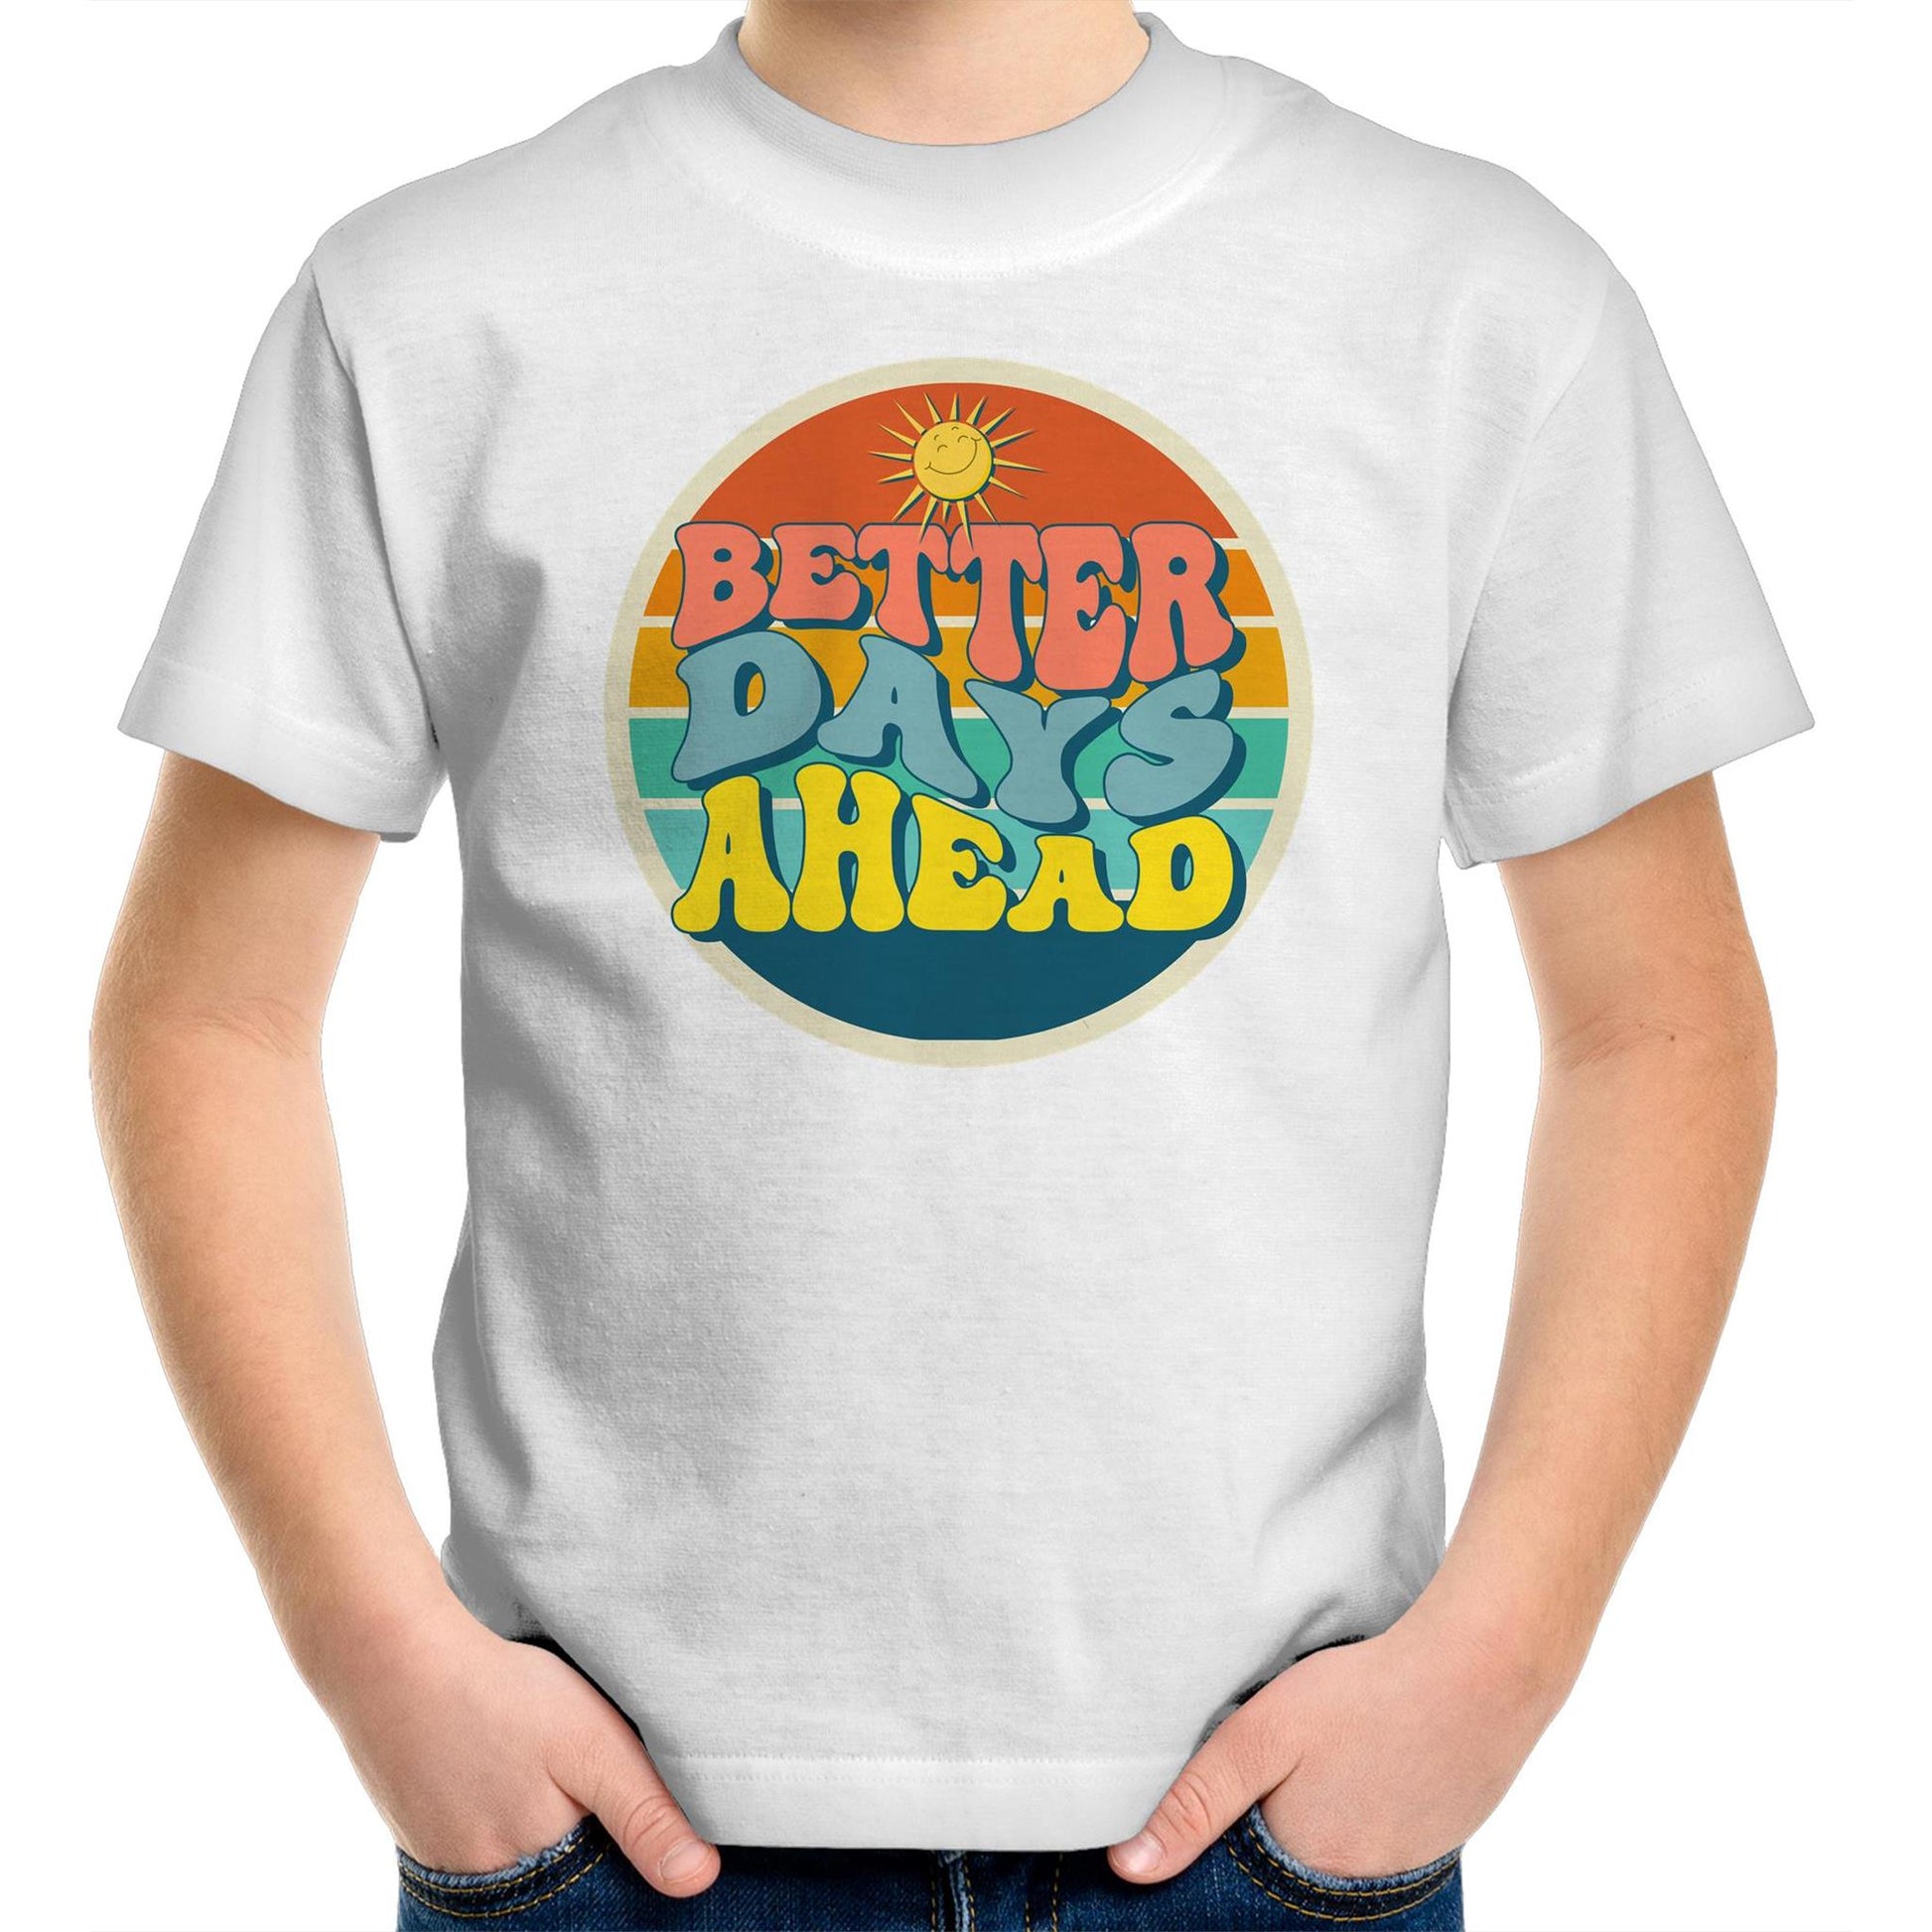 Better Days Ahead - Kids Youth T-Shirt White Kids Youth T-shirt Motivation Retro